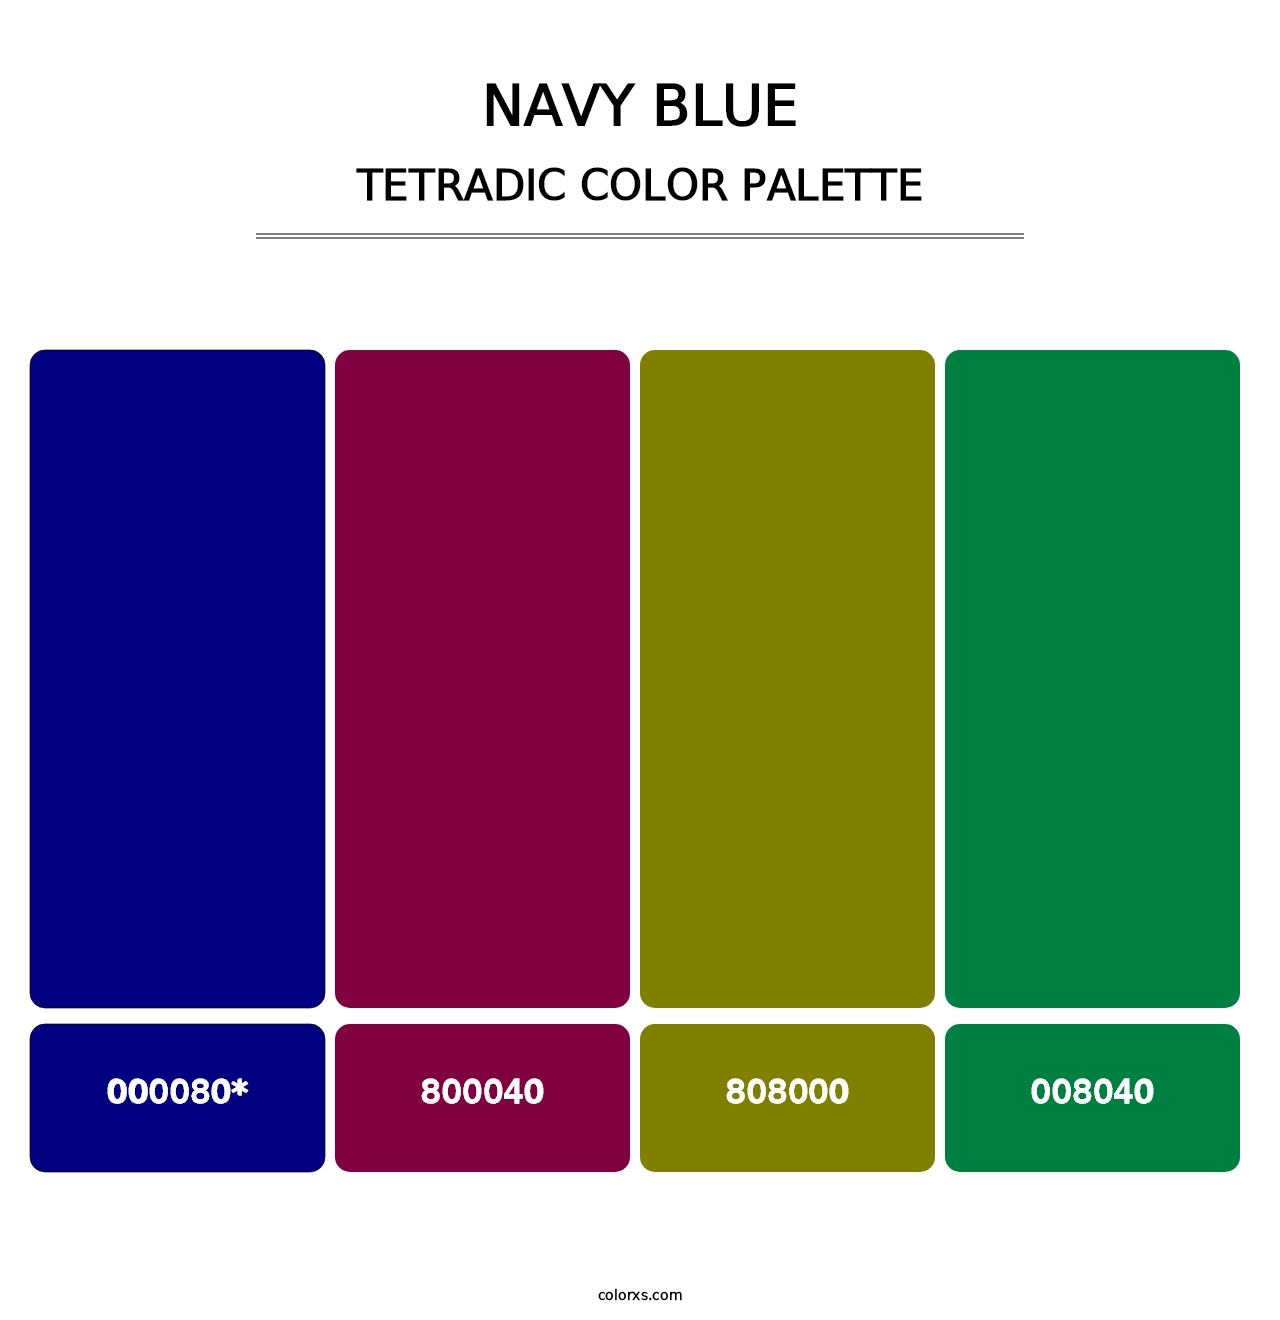 Navy Blue - Tetradic Color Palette